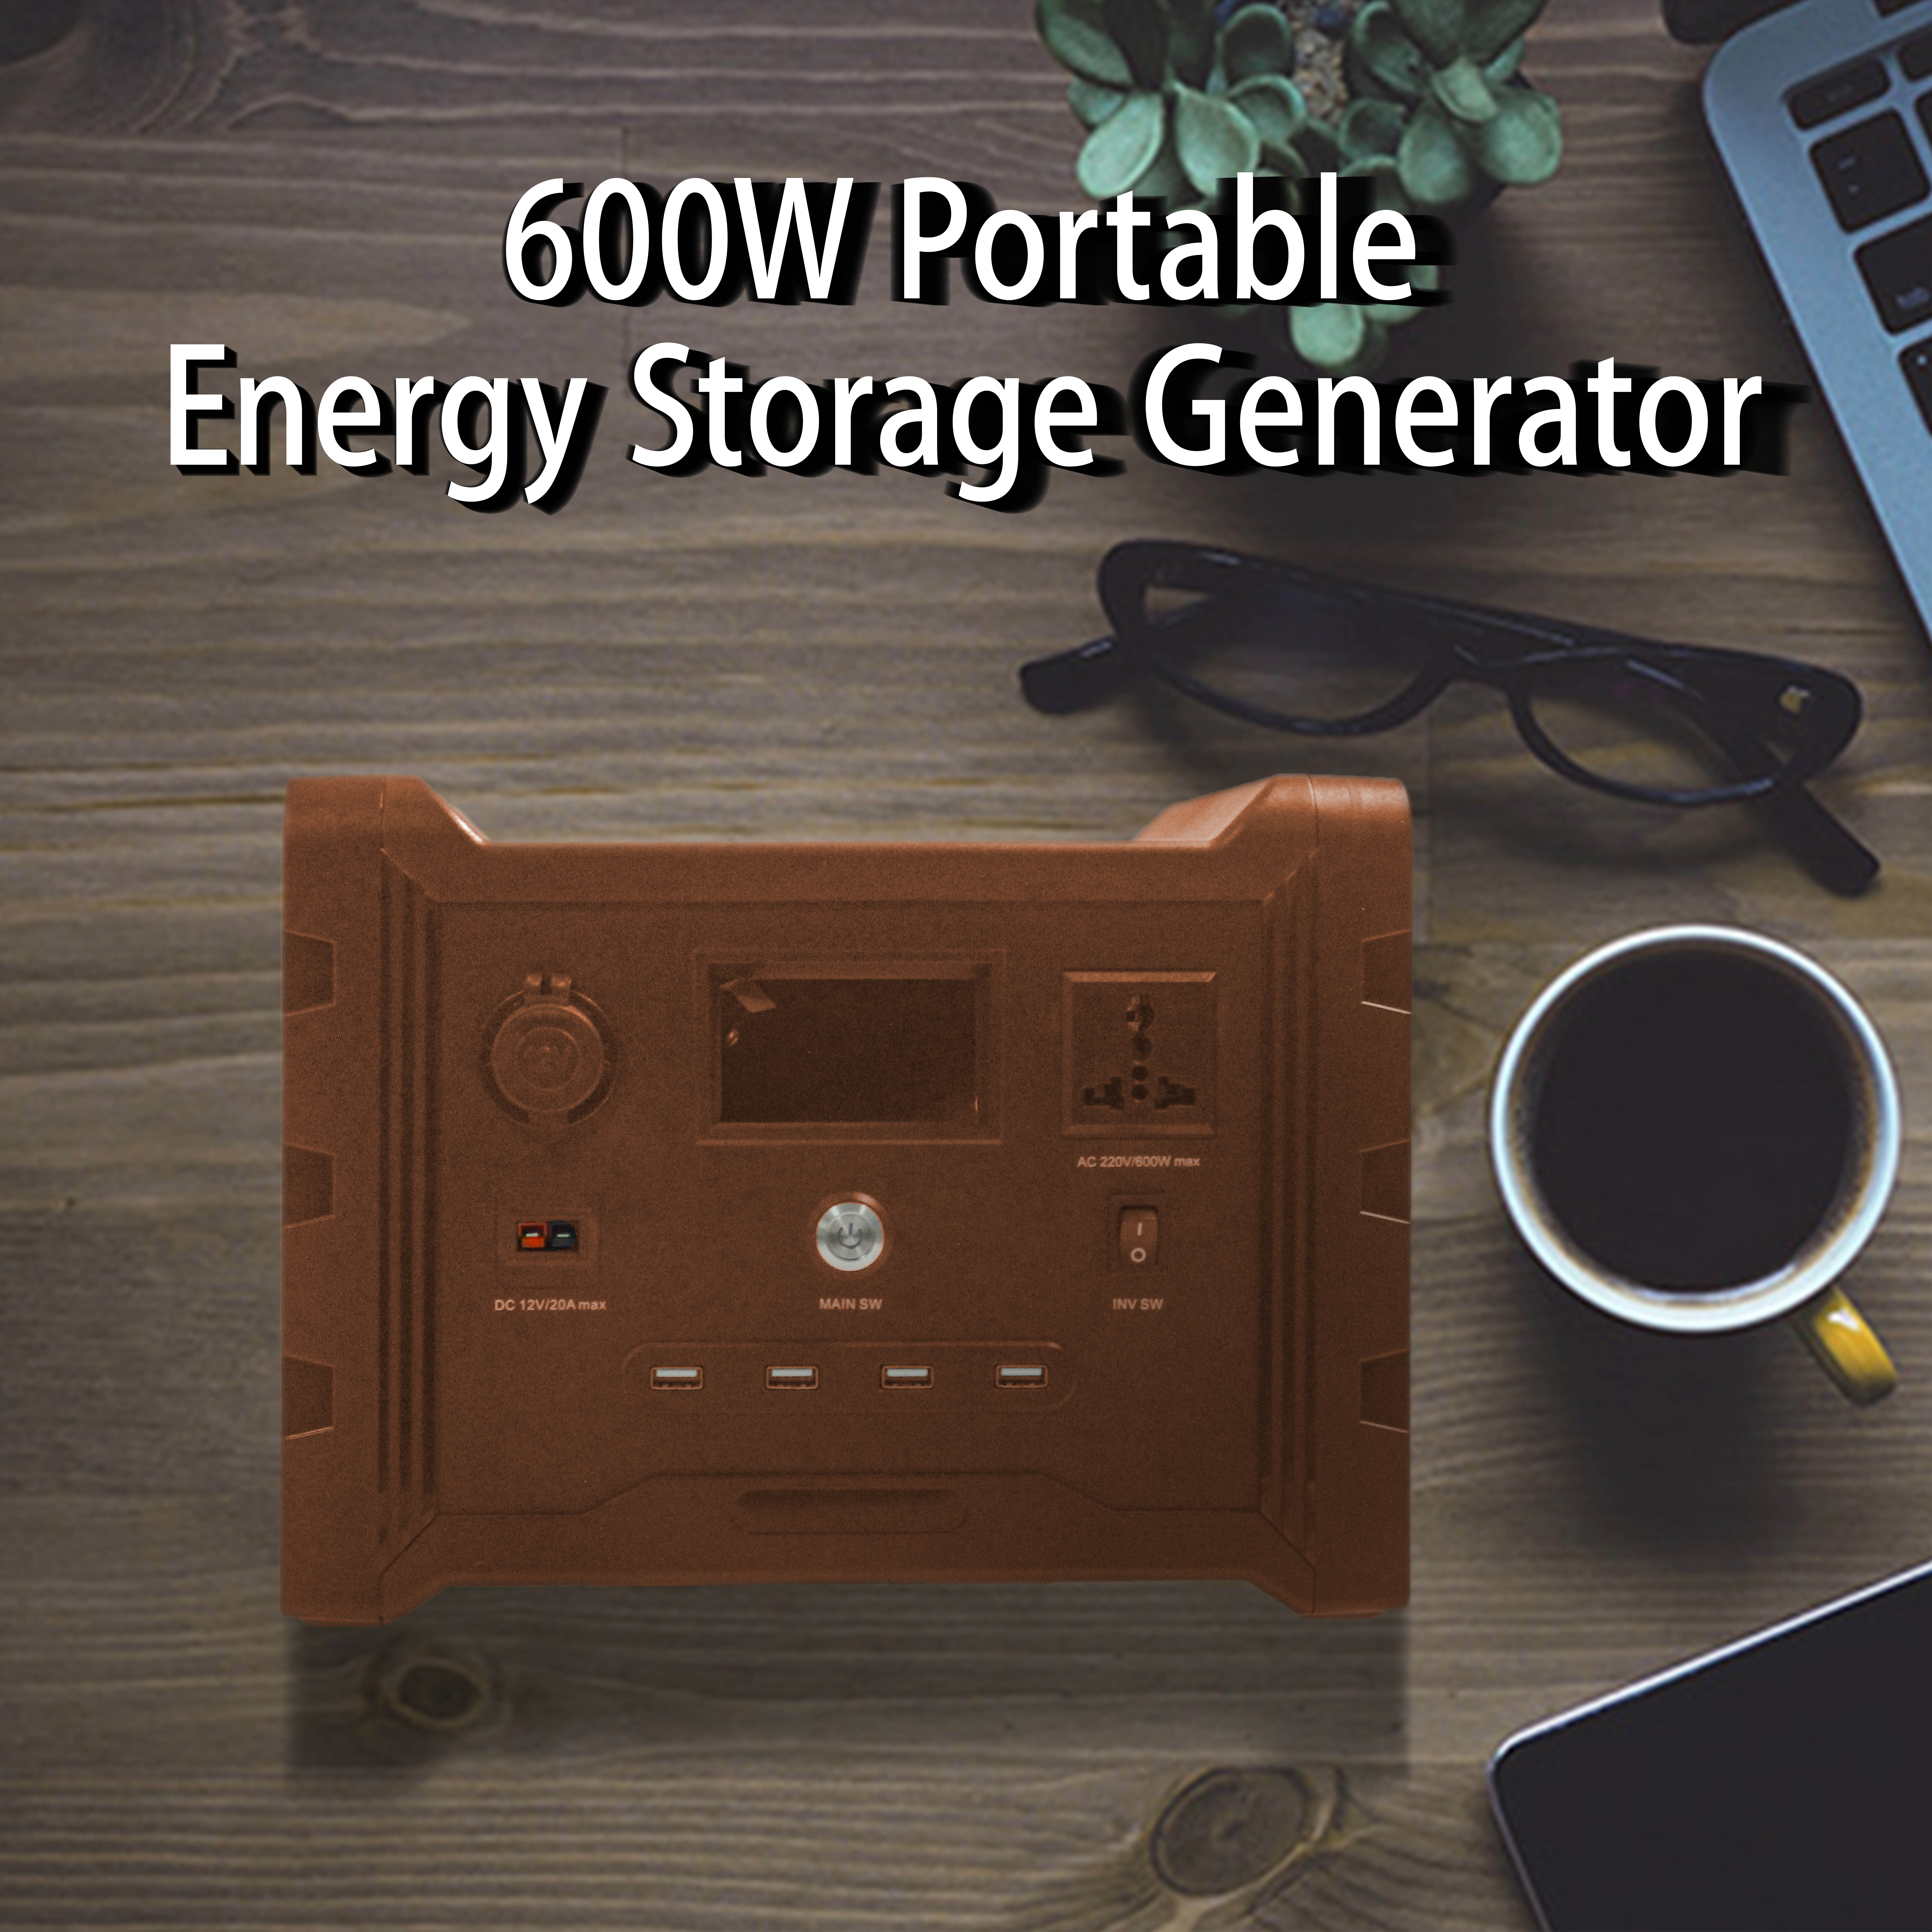 600W Portable Energy Storage Generator